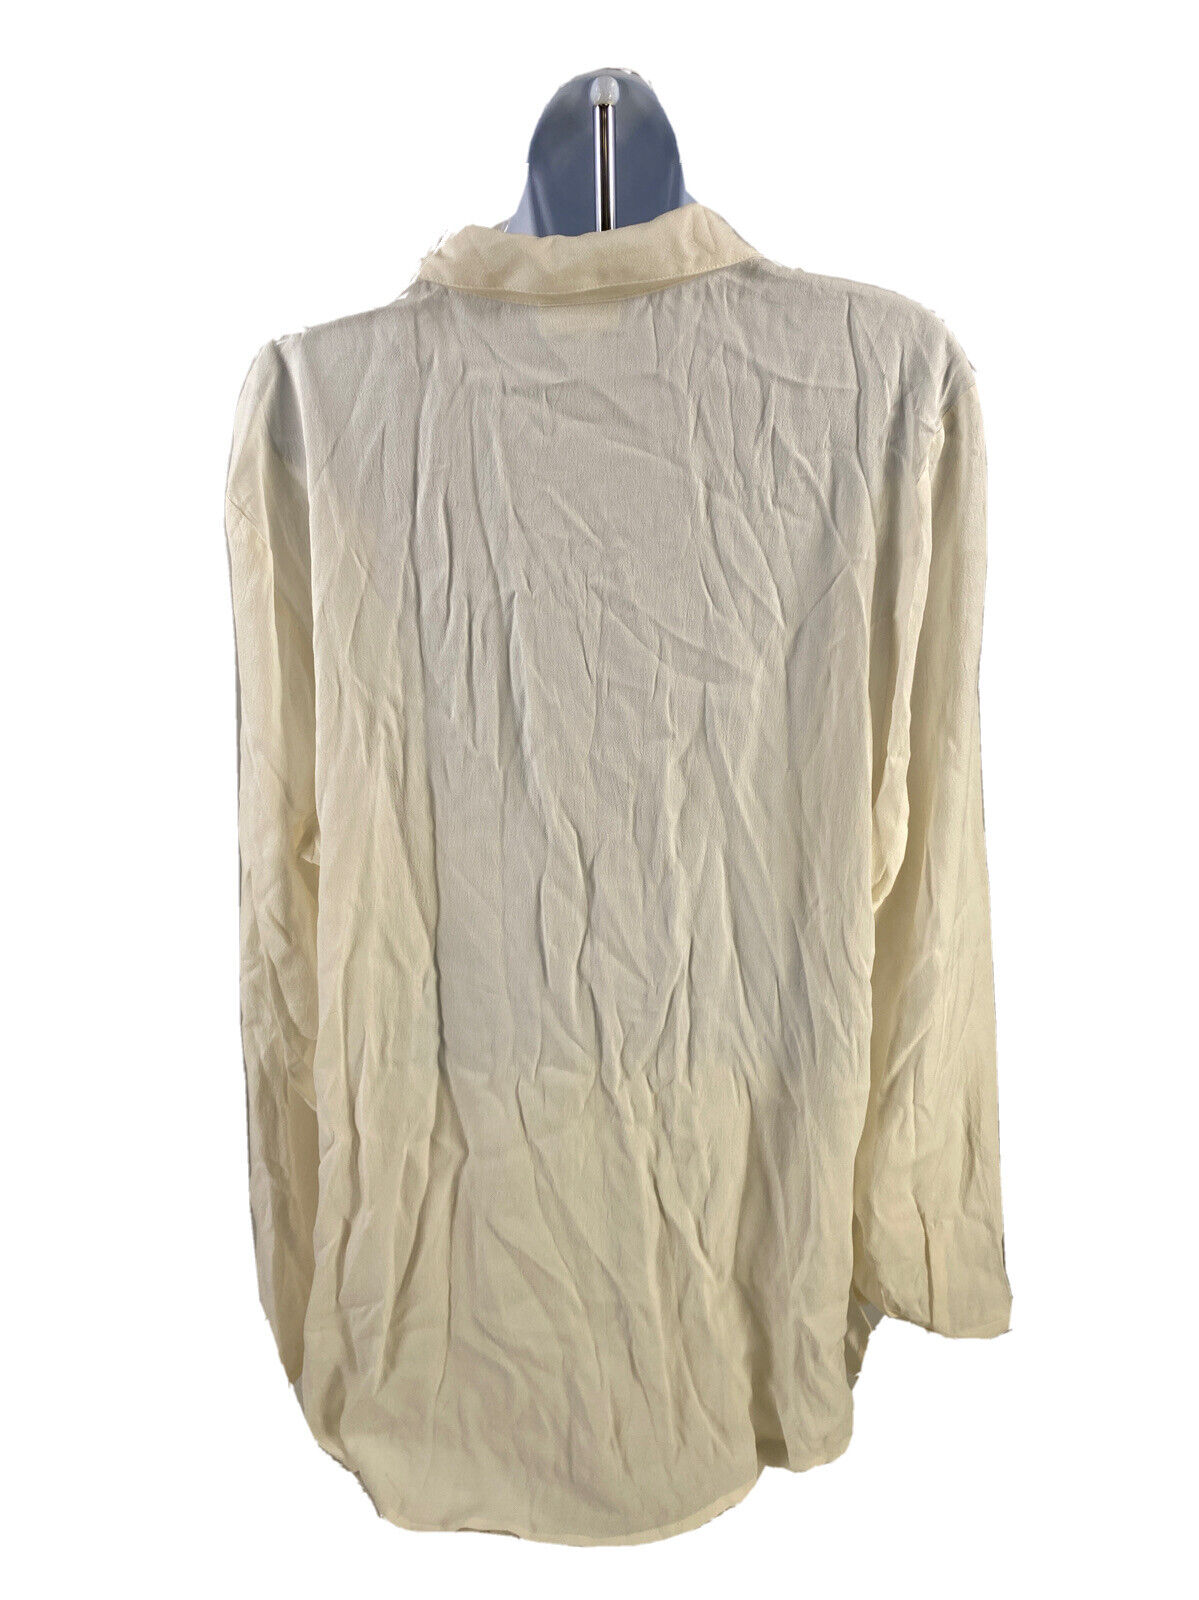 J.Jill Women's White Long Sleeve Button Up Pleated Blouse - XL